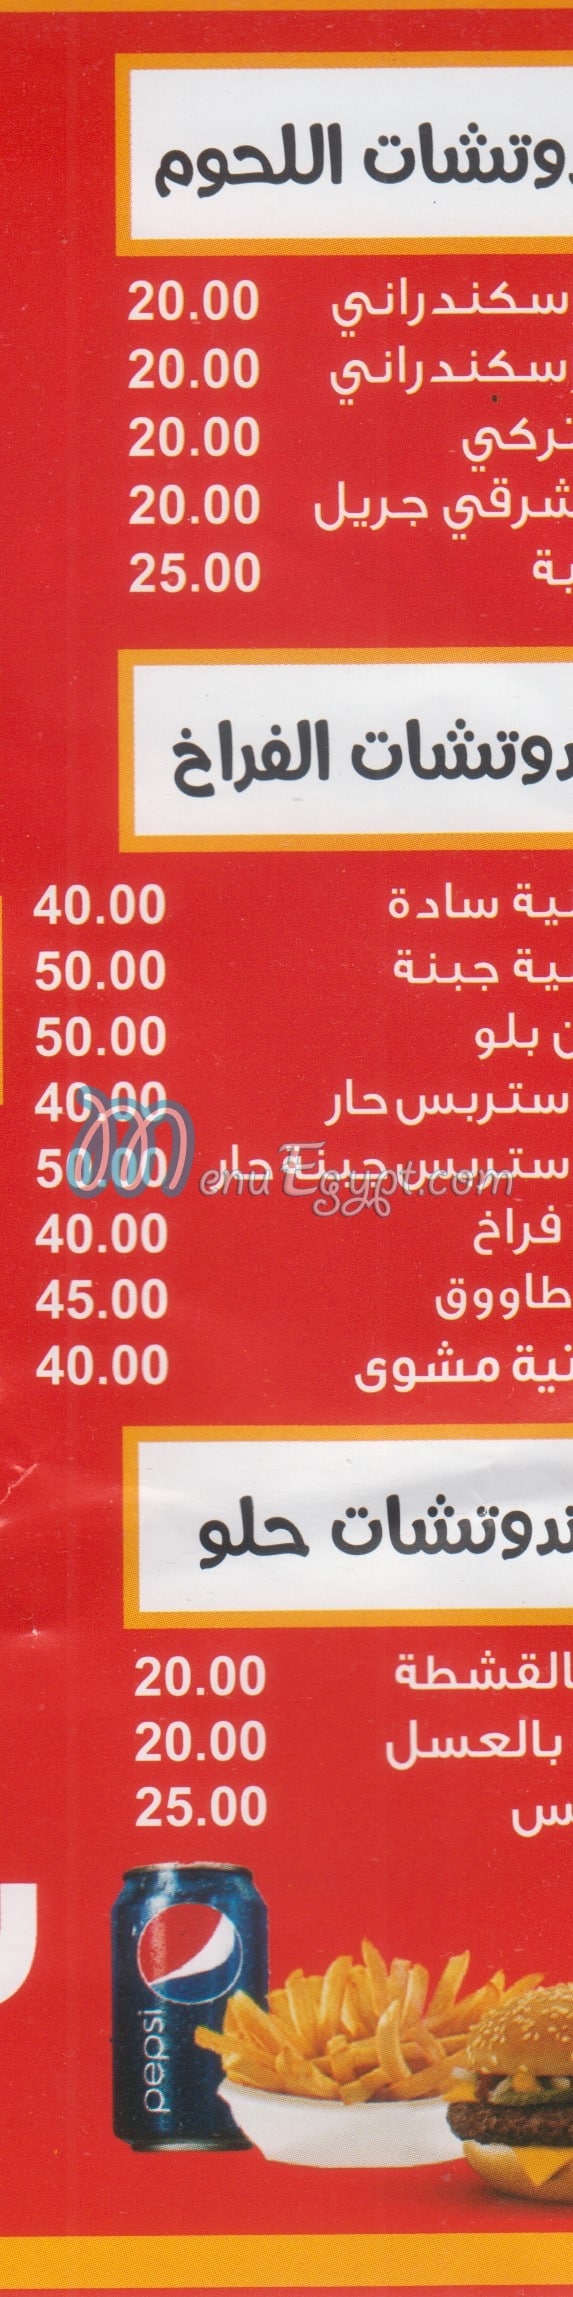 Salama El Motamyez menu